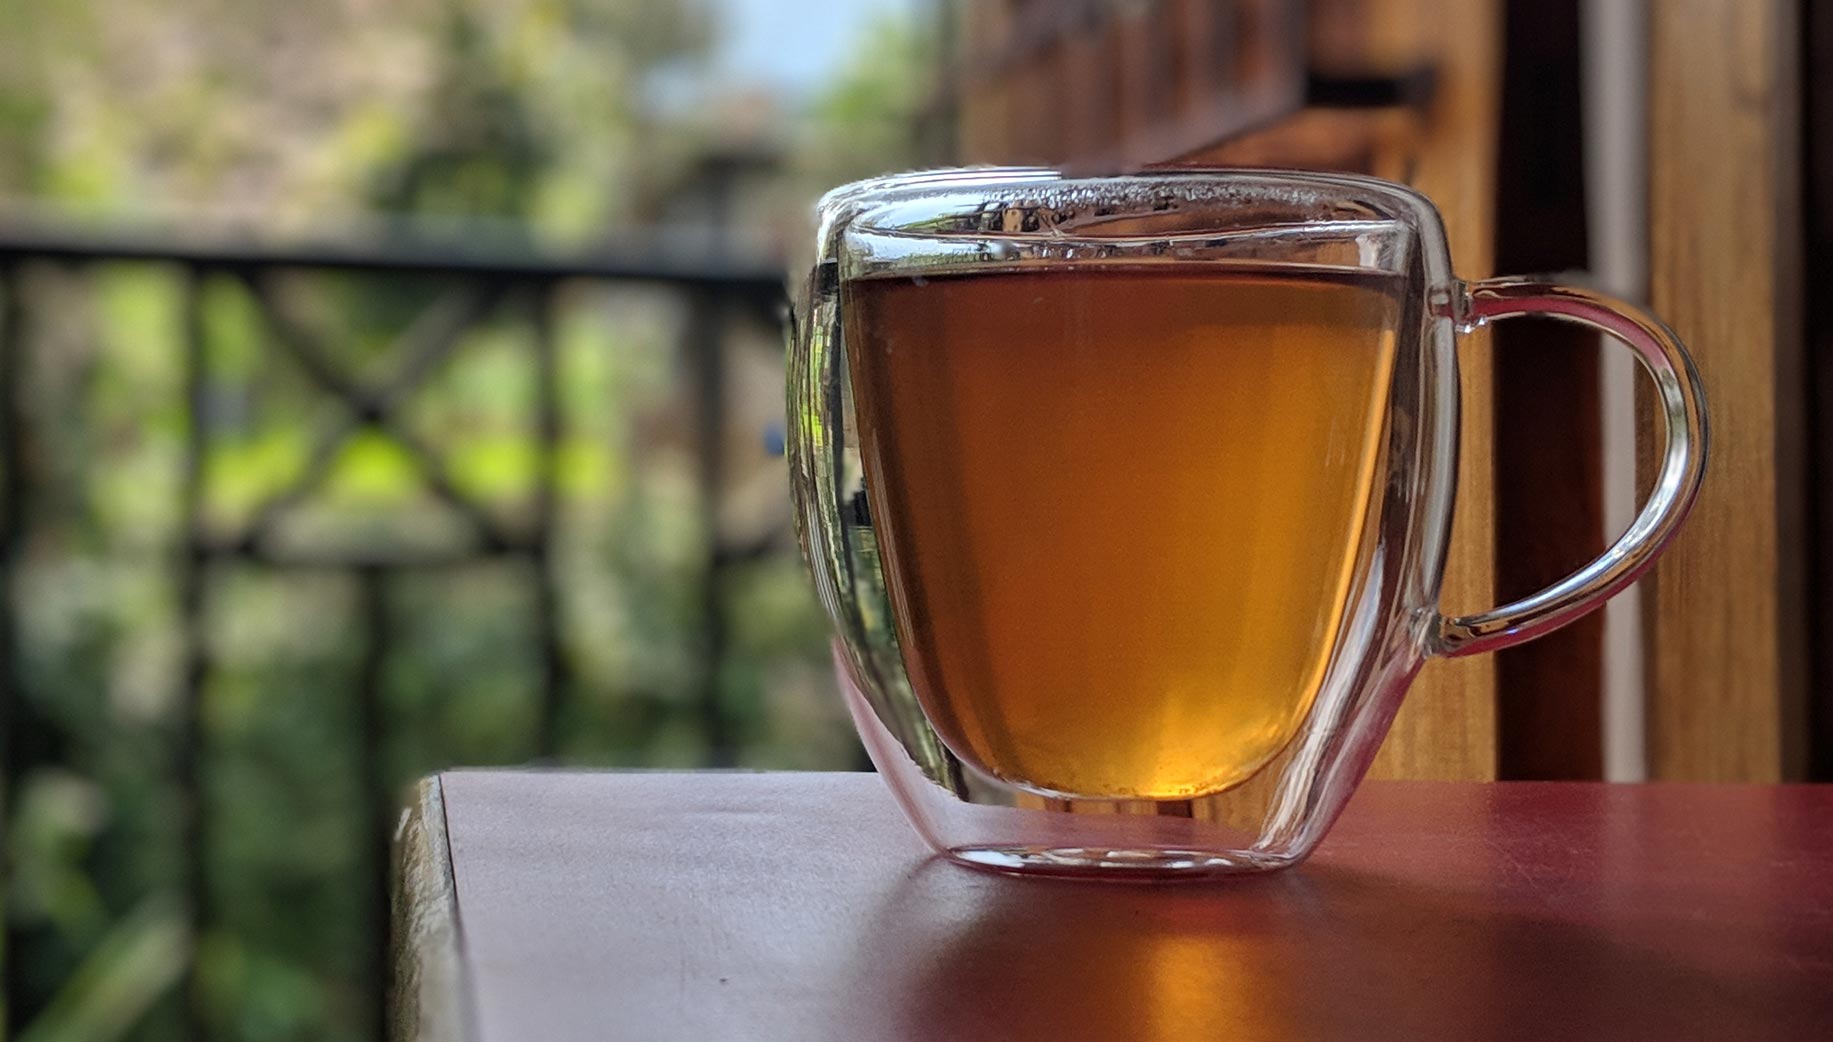 Bay leaf tea